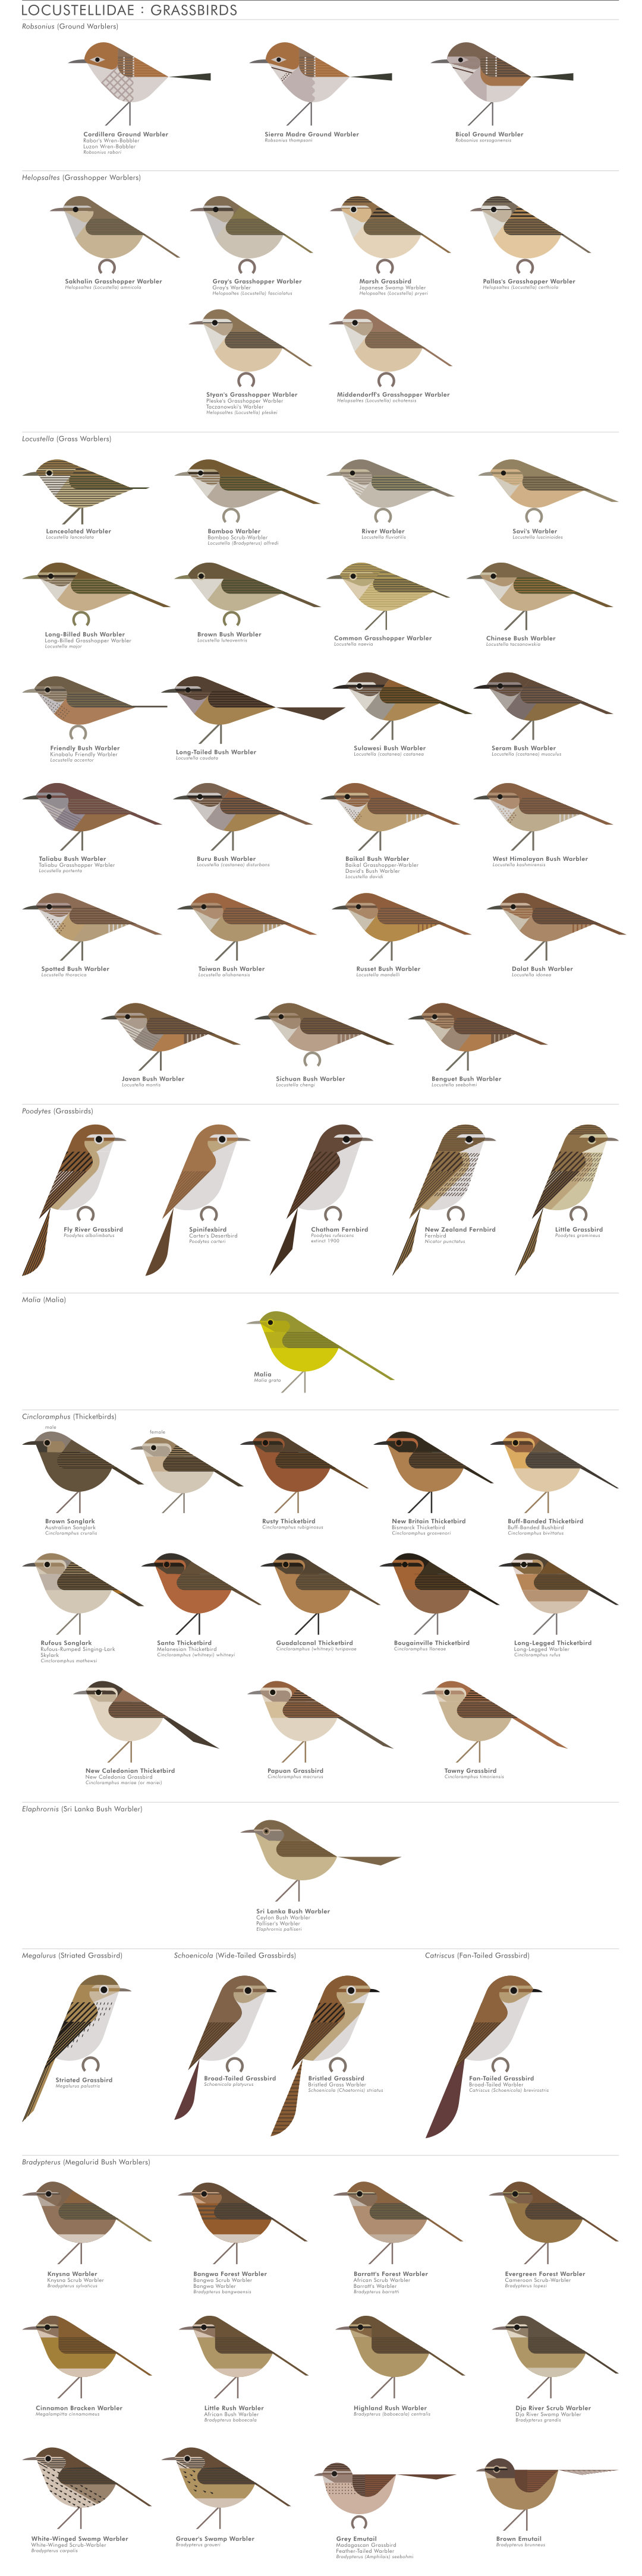 scott partridge - AVE - avian vector encyclopedia - grassbirds - bird vector art